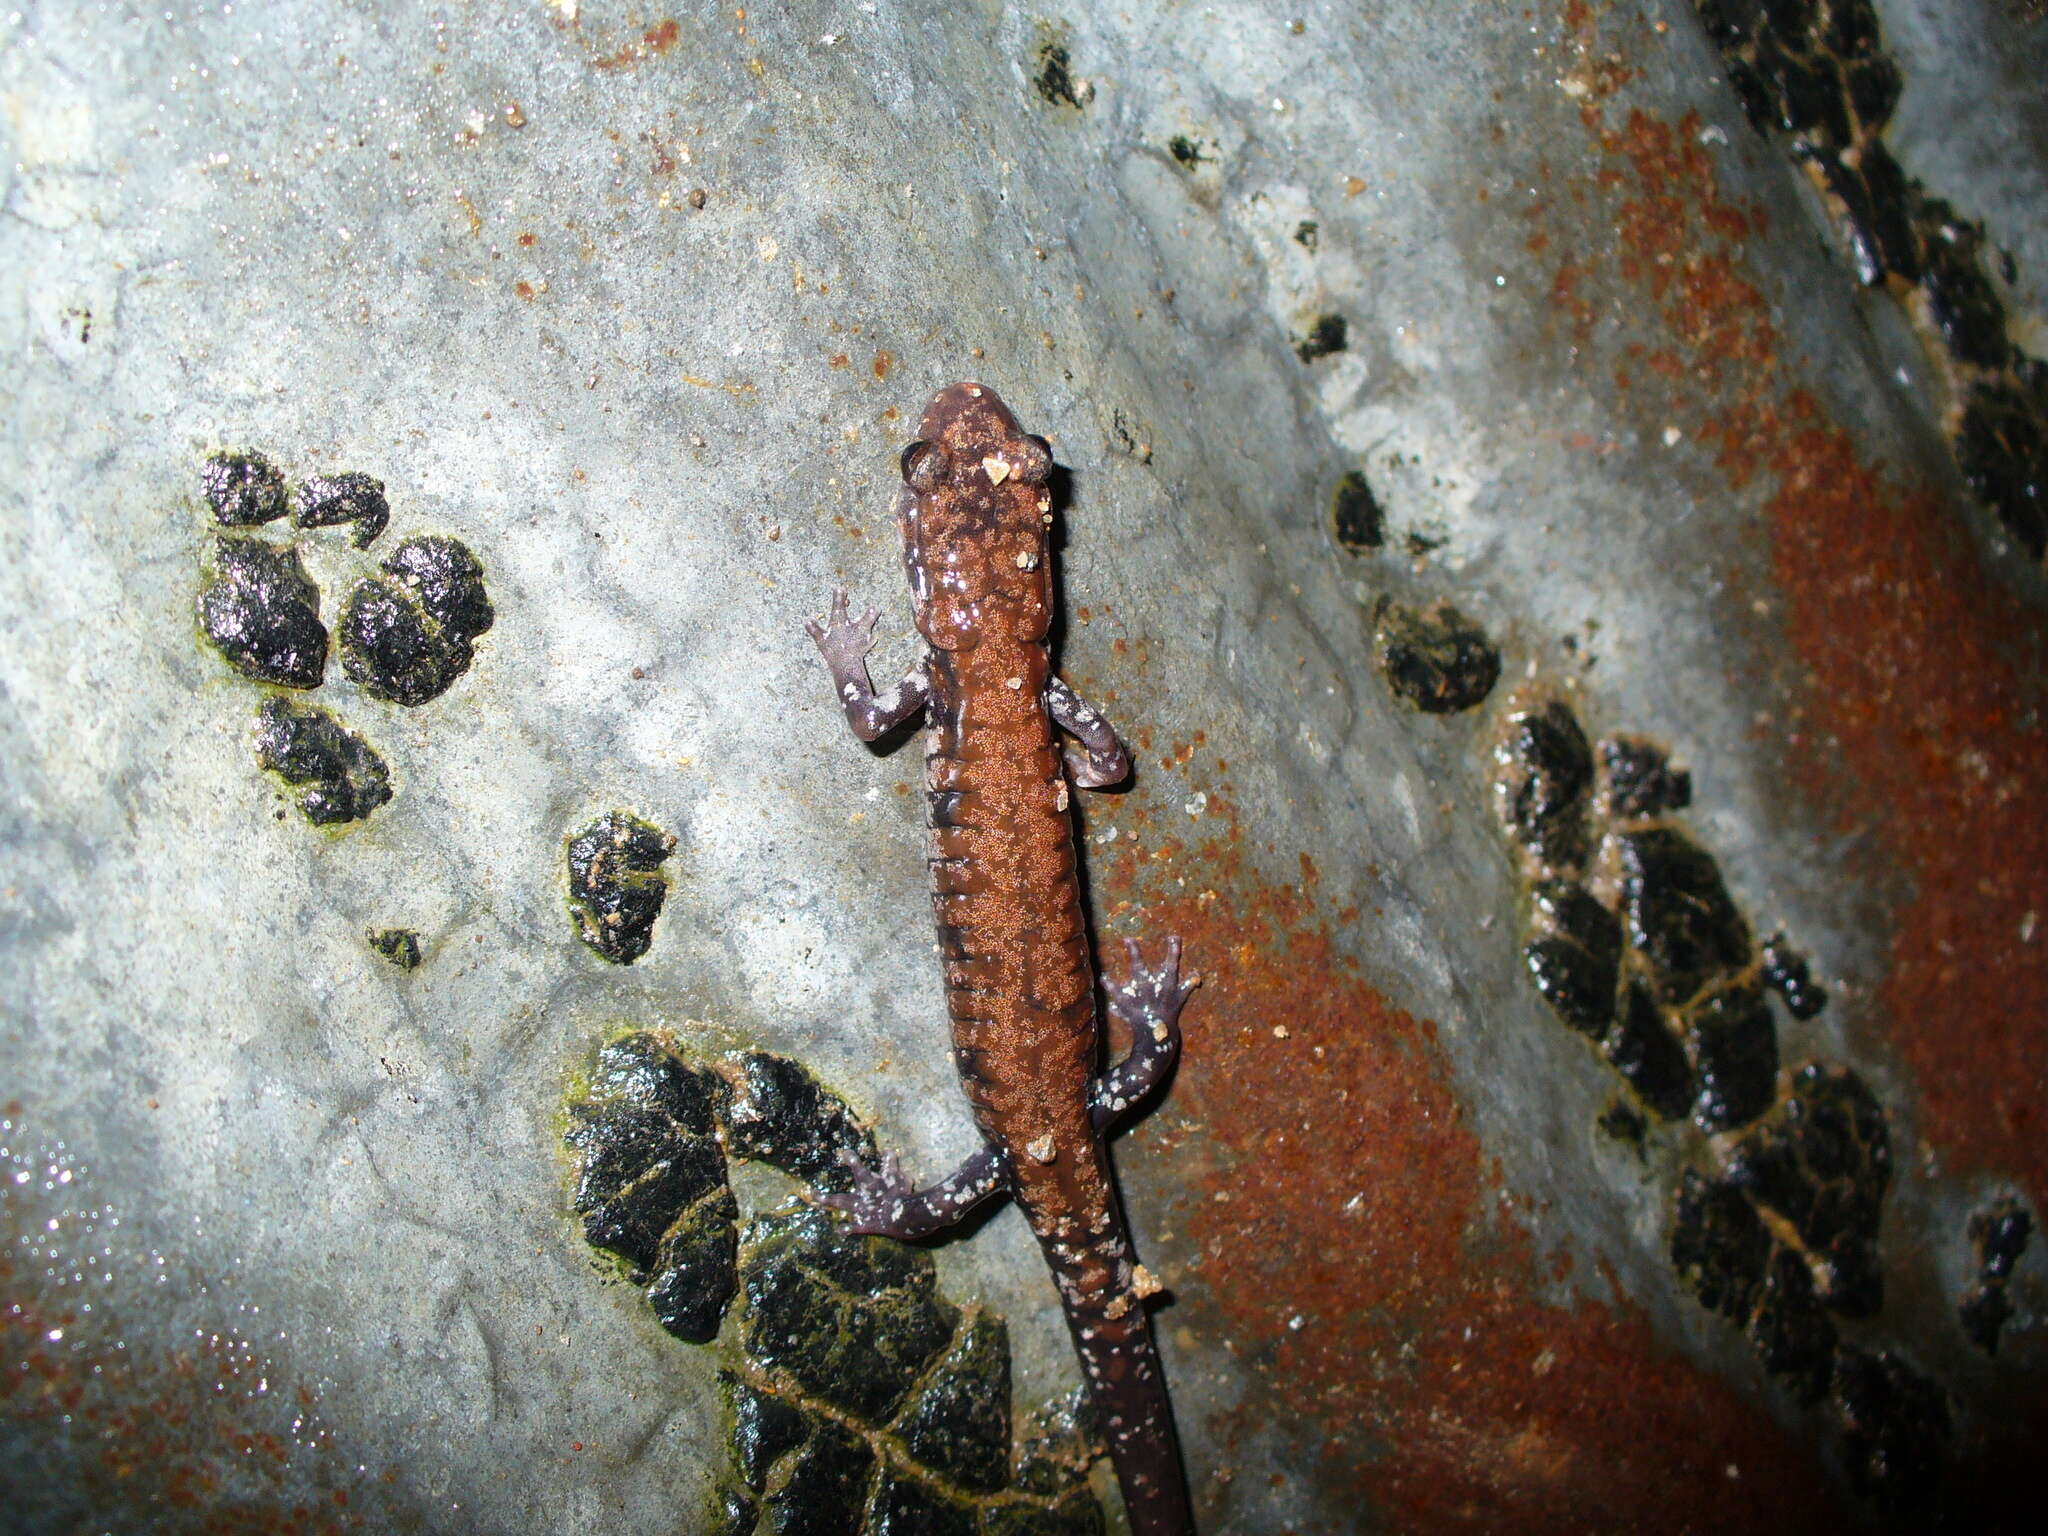 Image of Rich Mountain Salamander